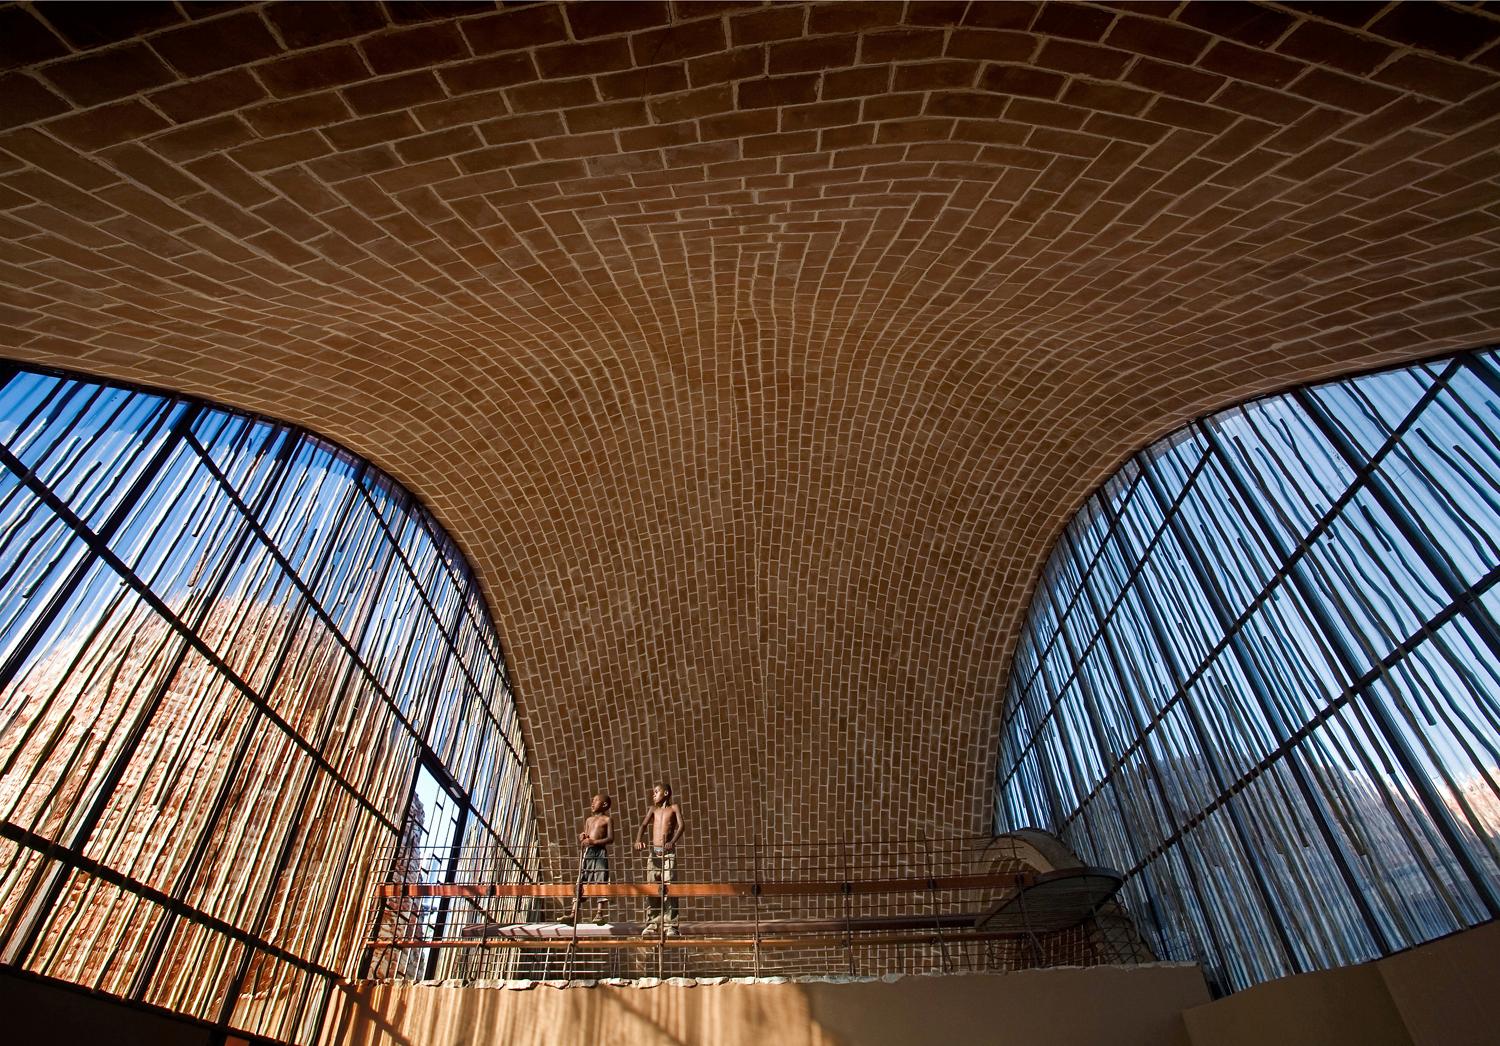 Mapungubwe Interpretation Center - The largest vaulted space